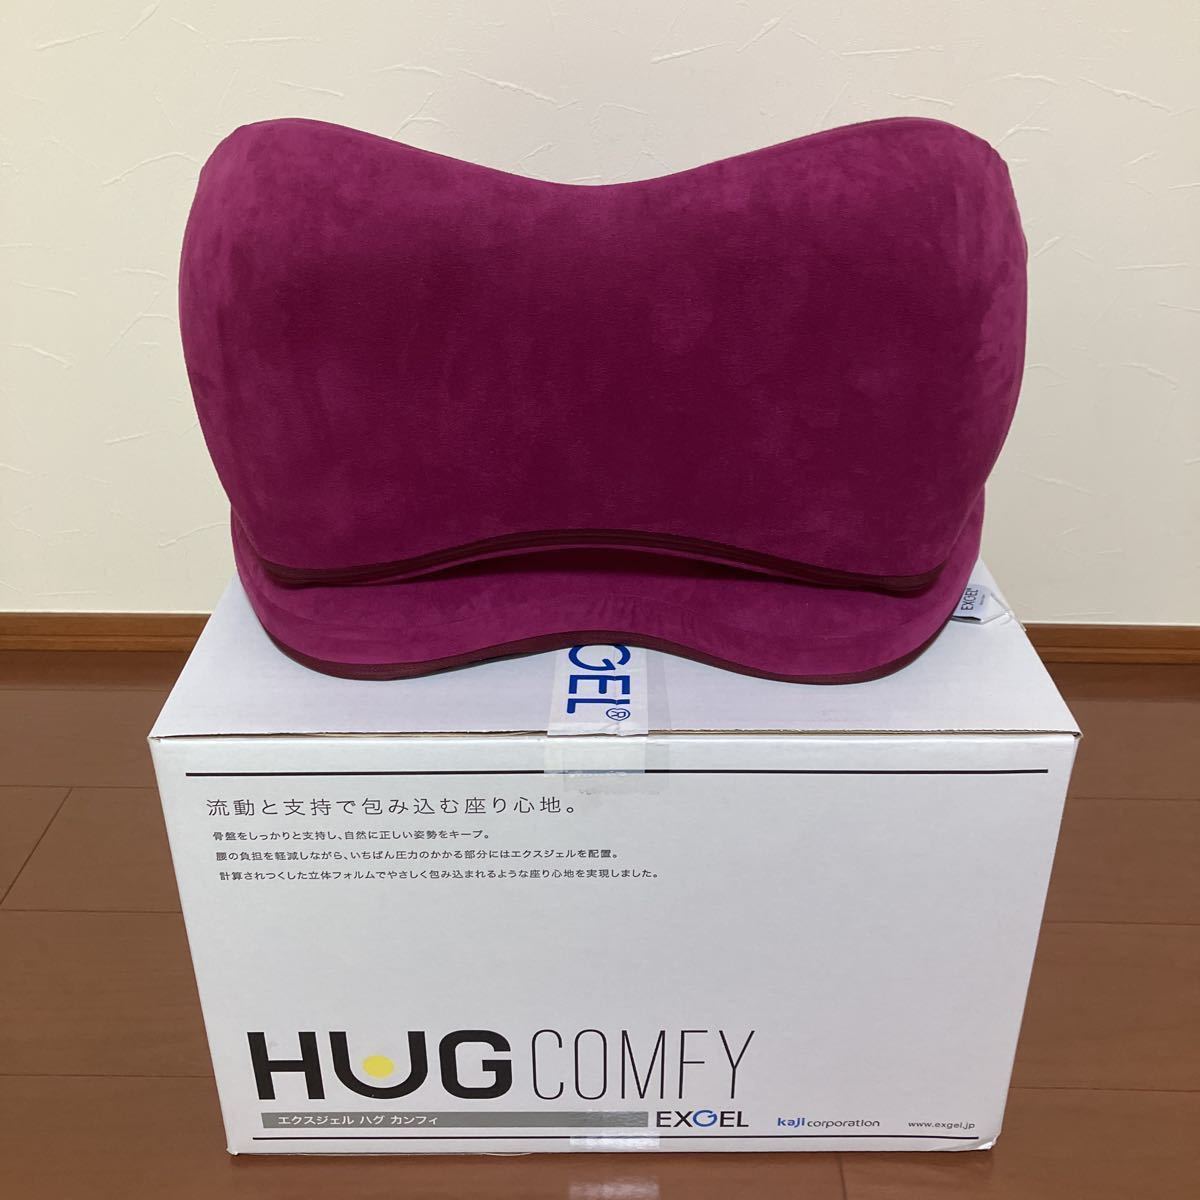 EXGEL☆座椅子☆ウルトラスエード☆Hug Comfy Premium☆ハグカンフィ